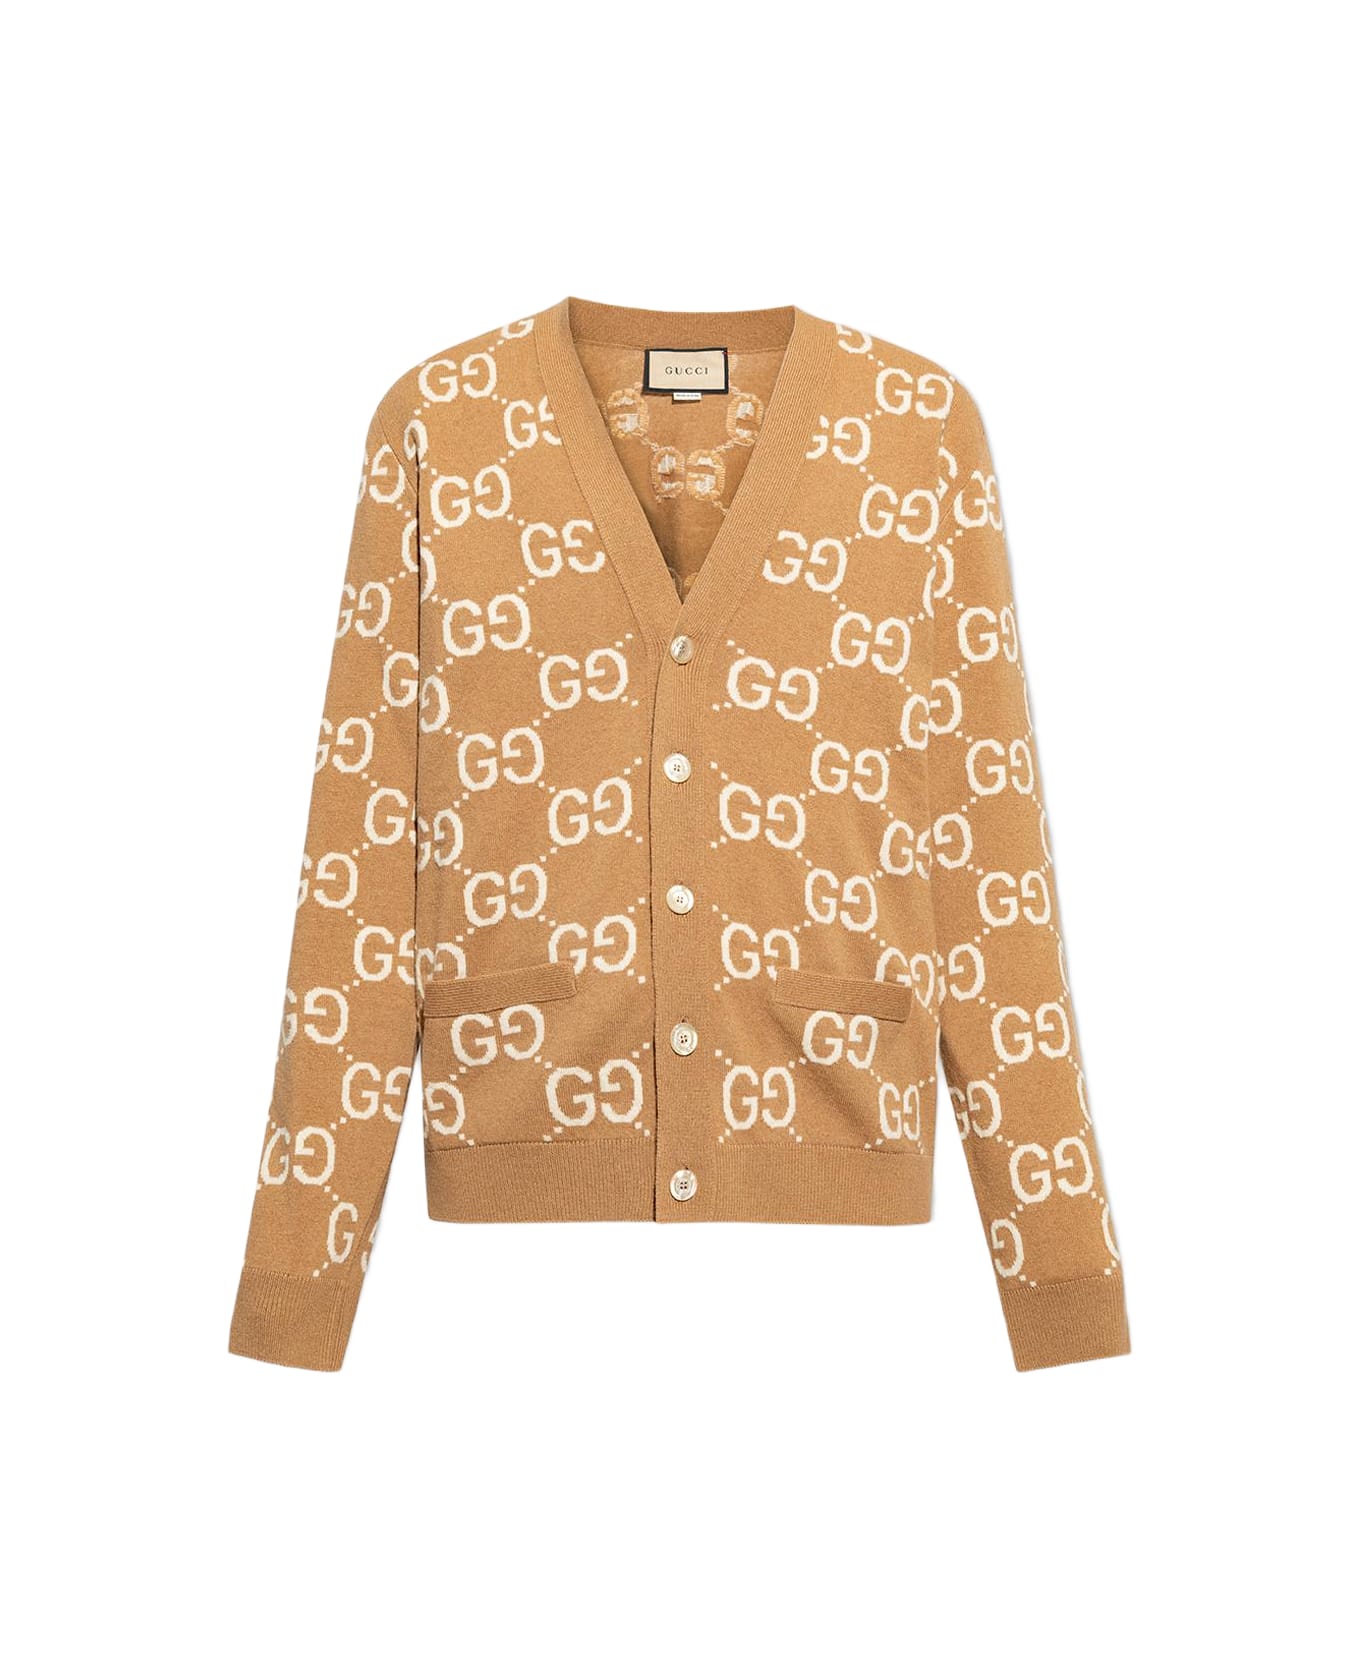 Gucci Wool Cardigan With Monogram - Camel